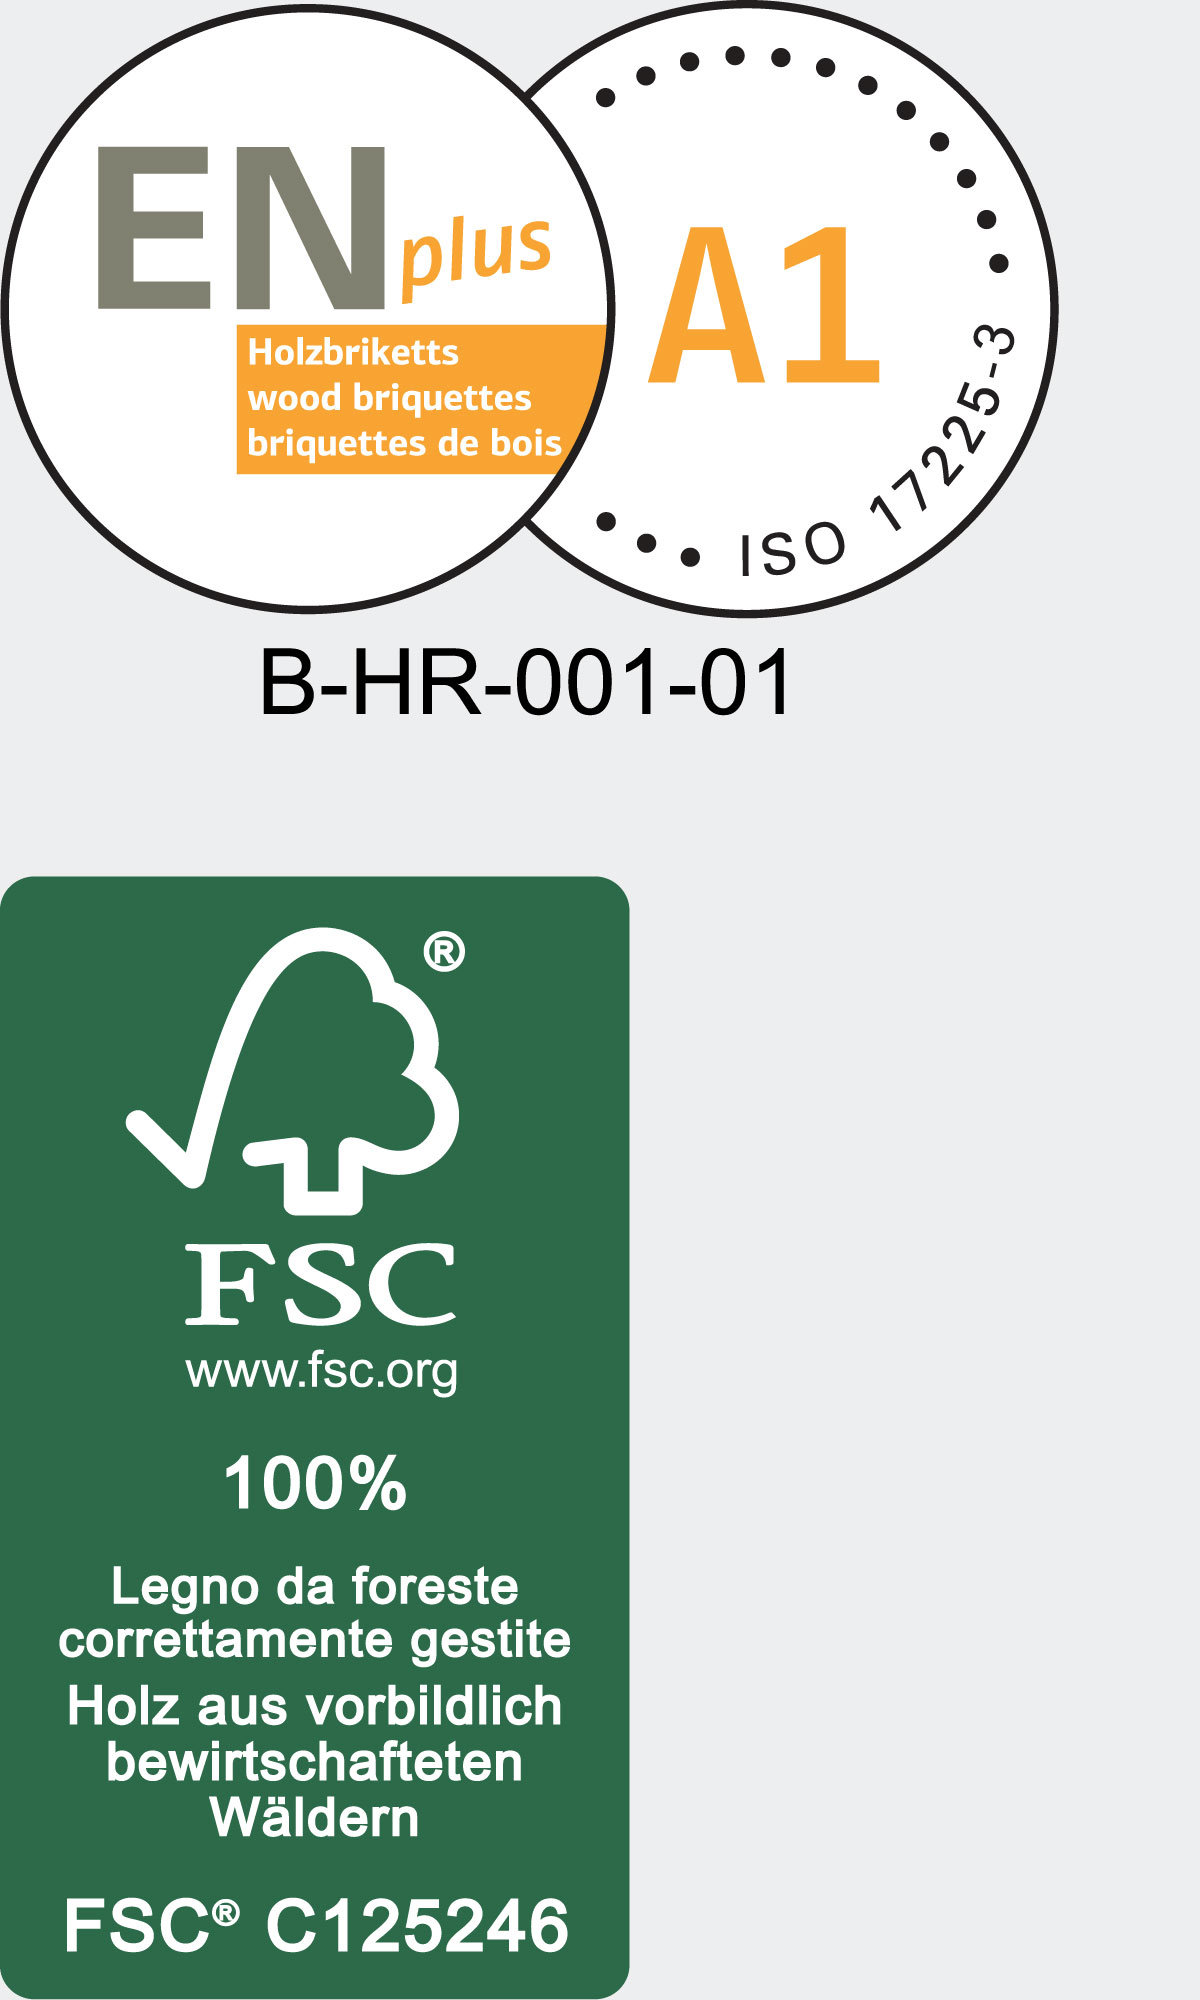 FSC and ENplusA1 Certificates